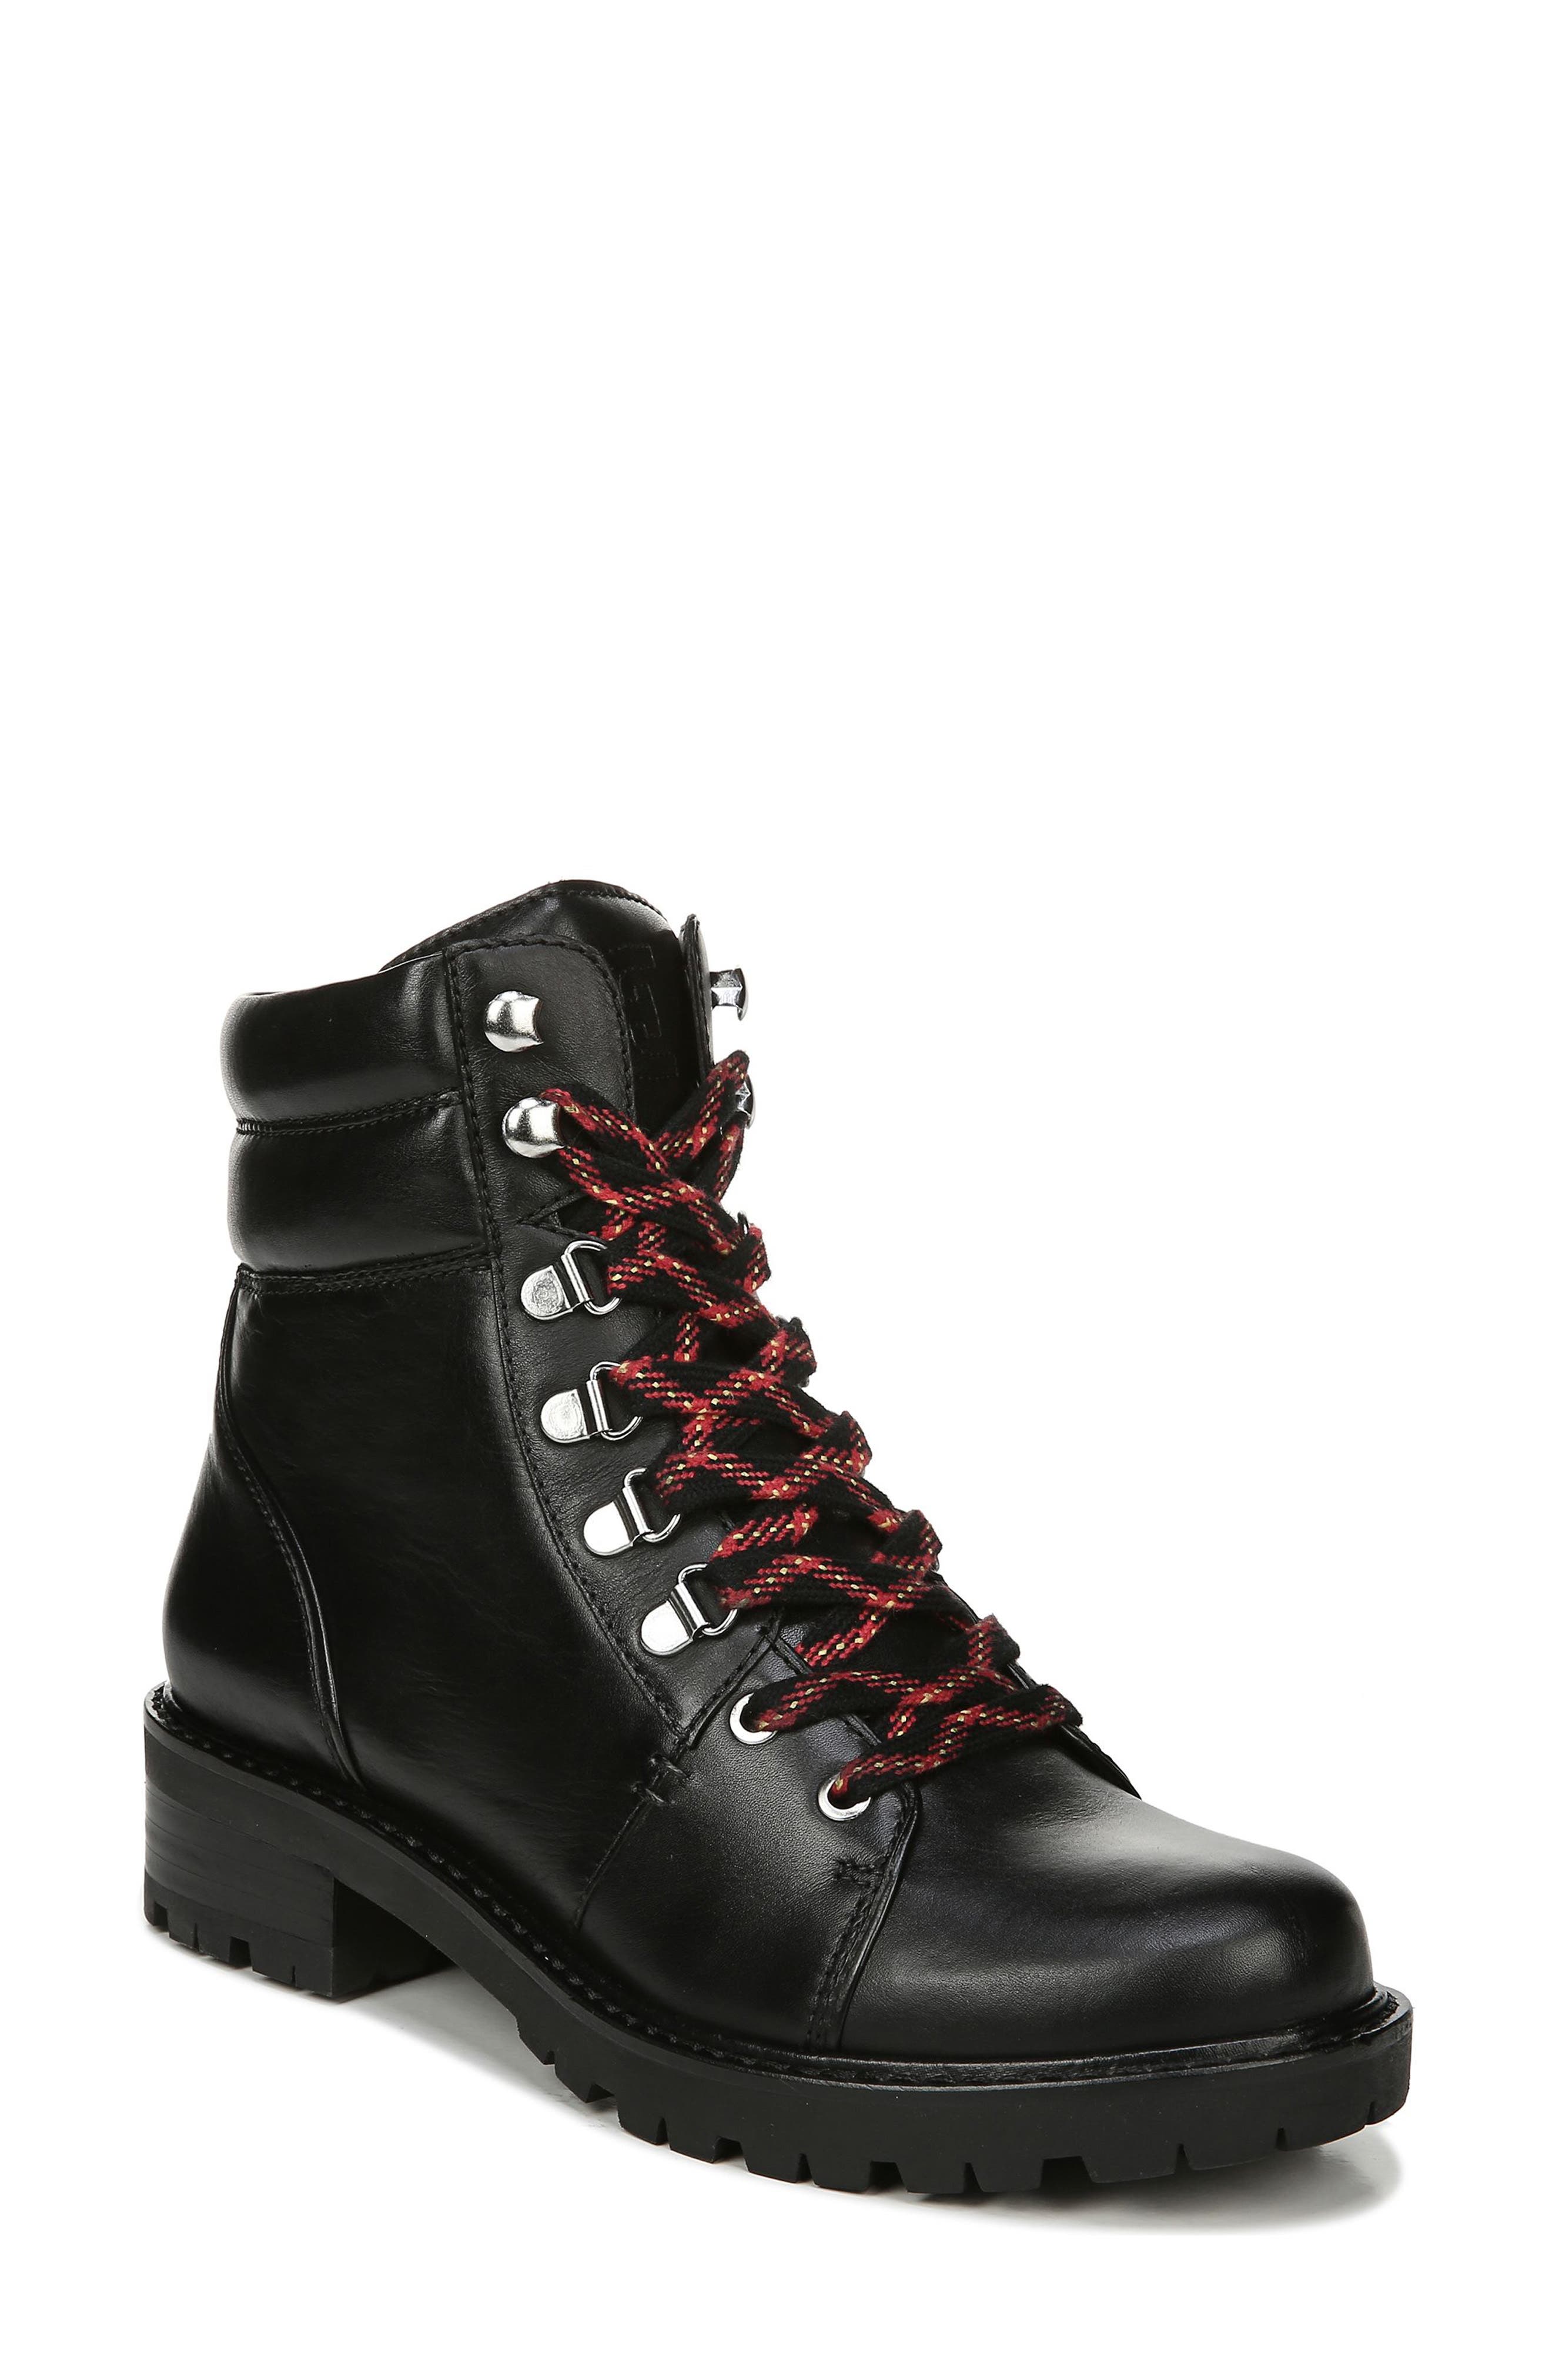 UPC 736716000569 product image for Women's Sam Edelman Tamia Lace-Up Hiking Boot, Size 5 M - Black | upcitemdb.com